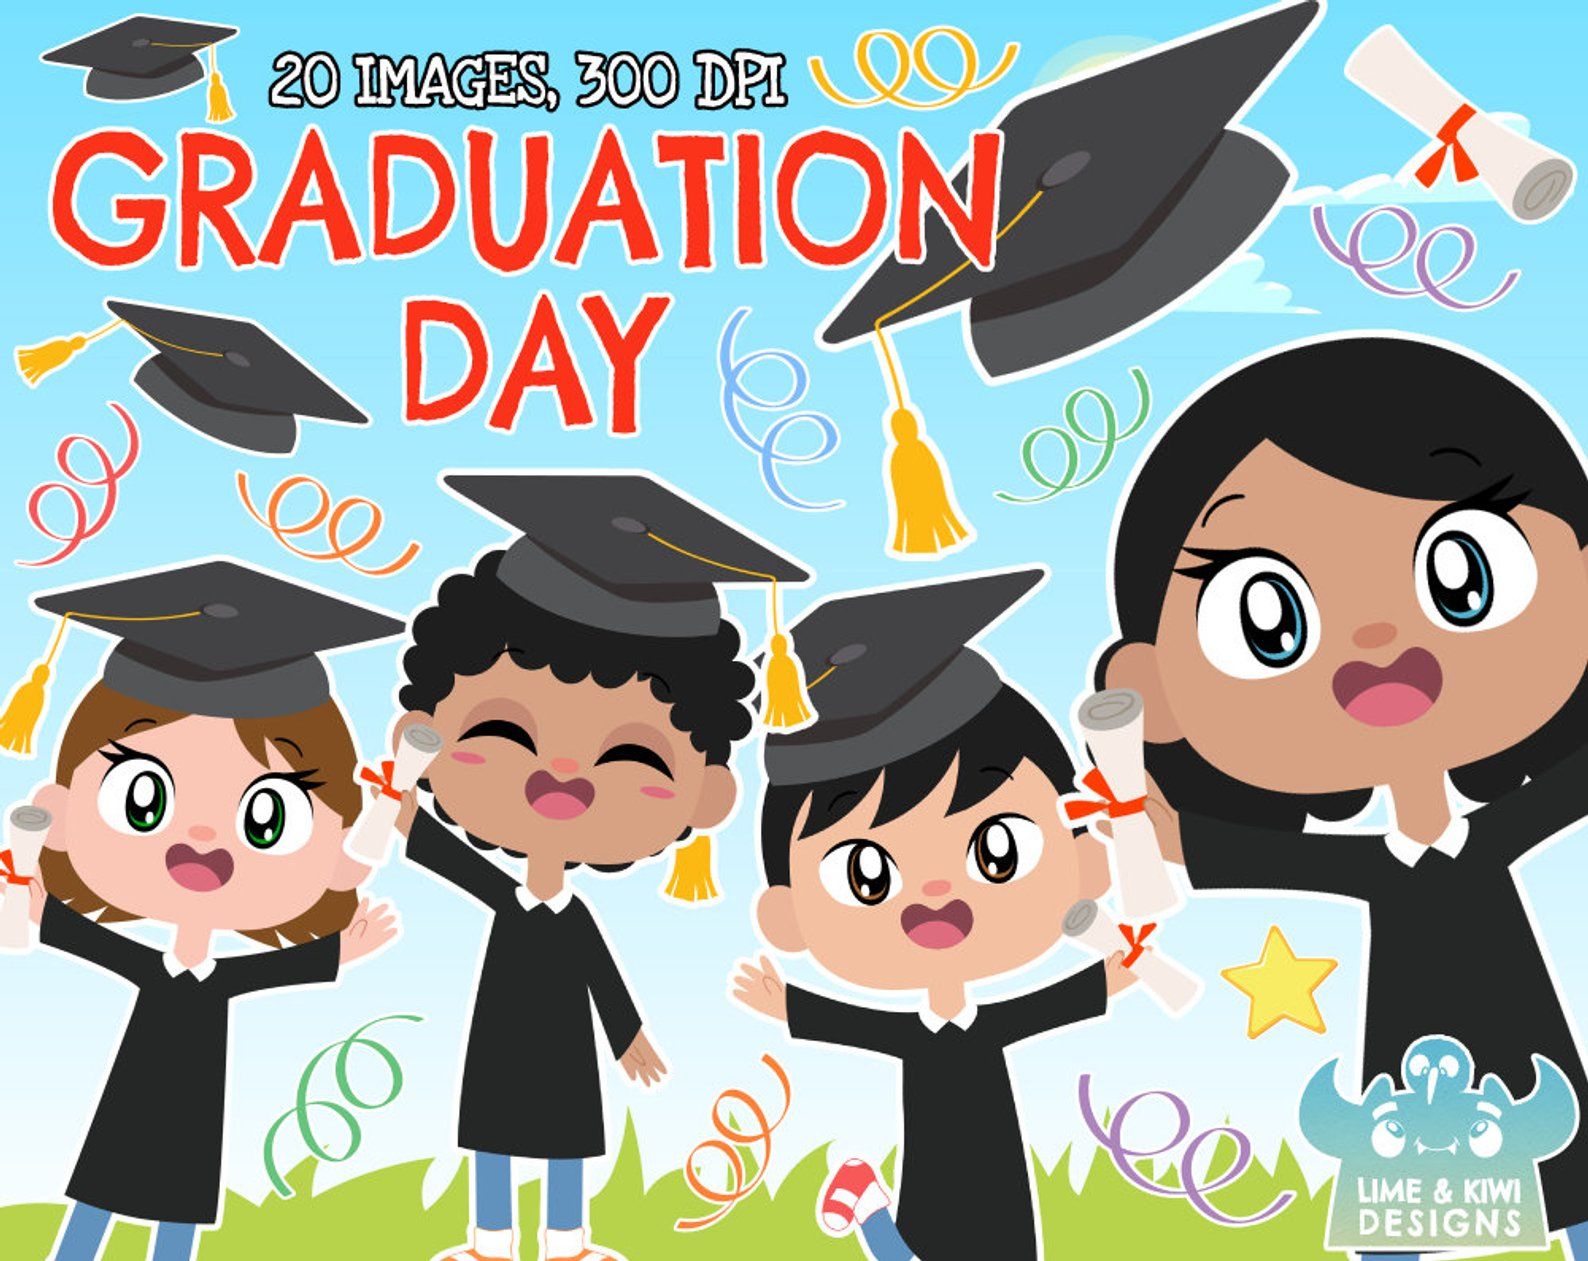 Graduation Day Clipart, Instant Download Vector Art.